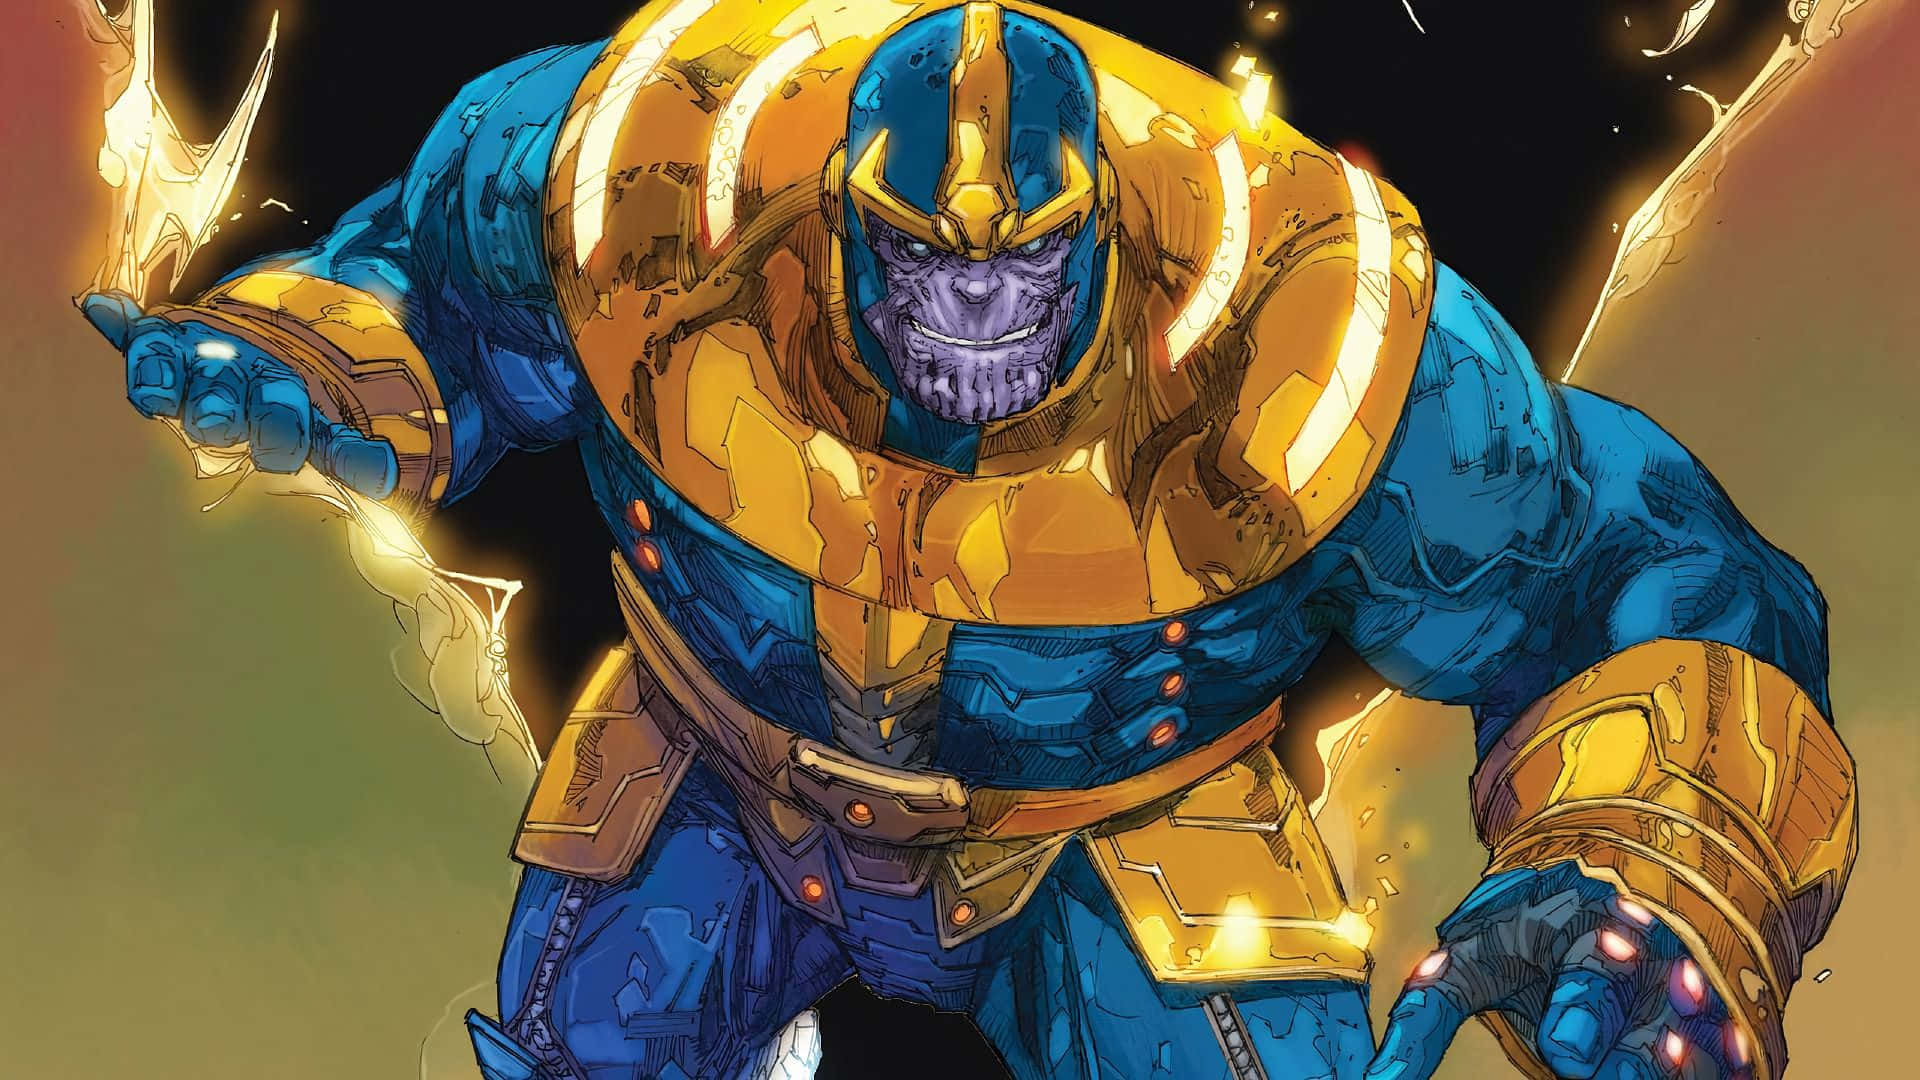 Thanos, the powerful cosmic tyrant